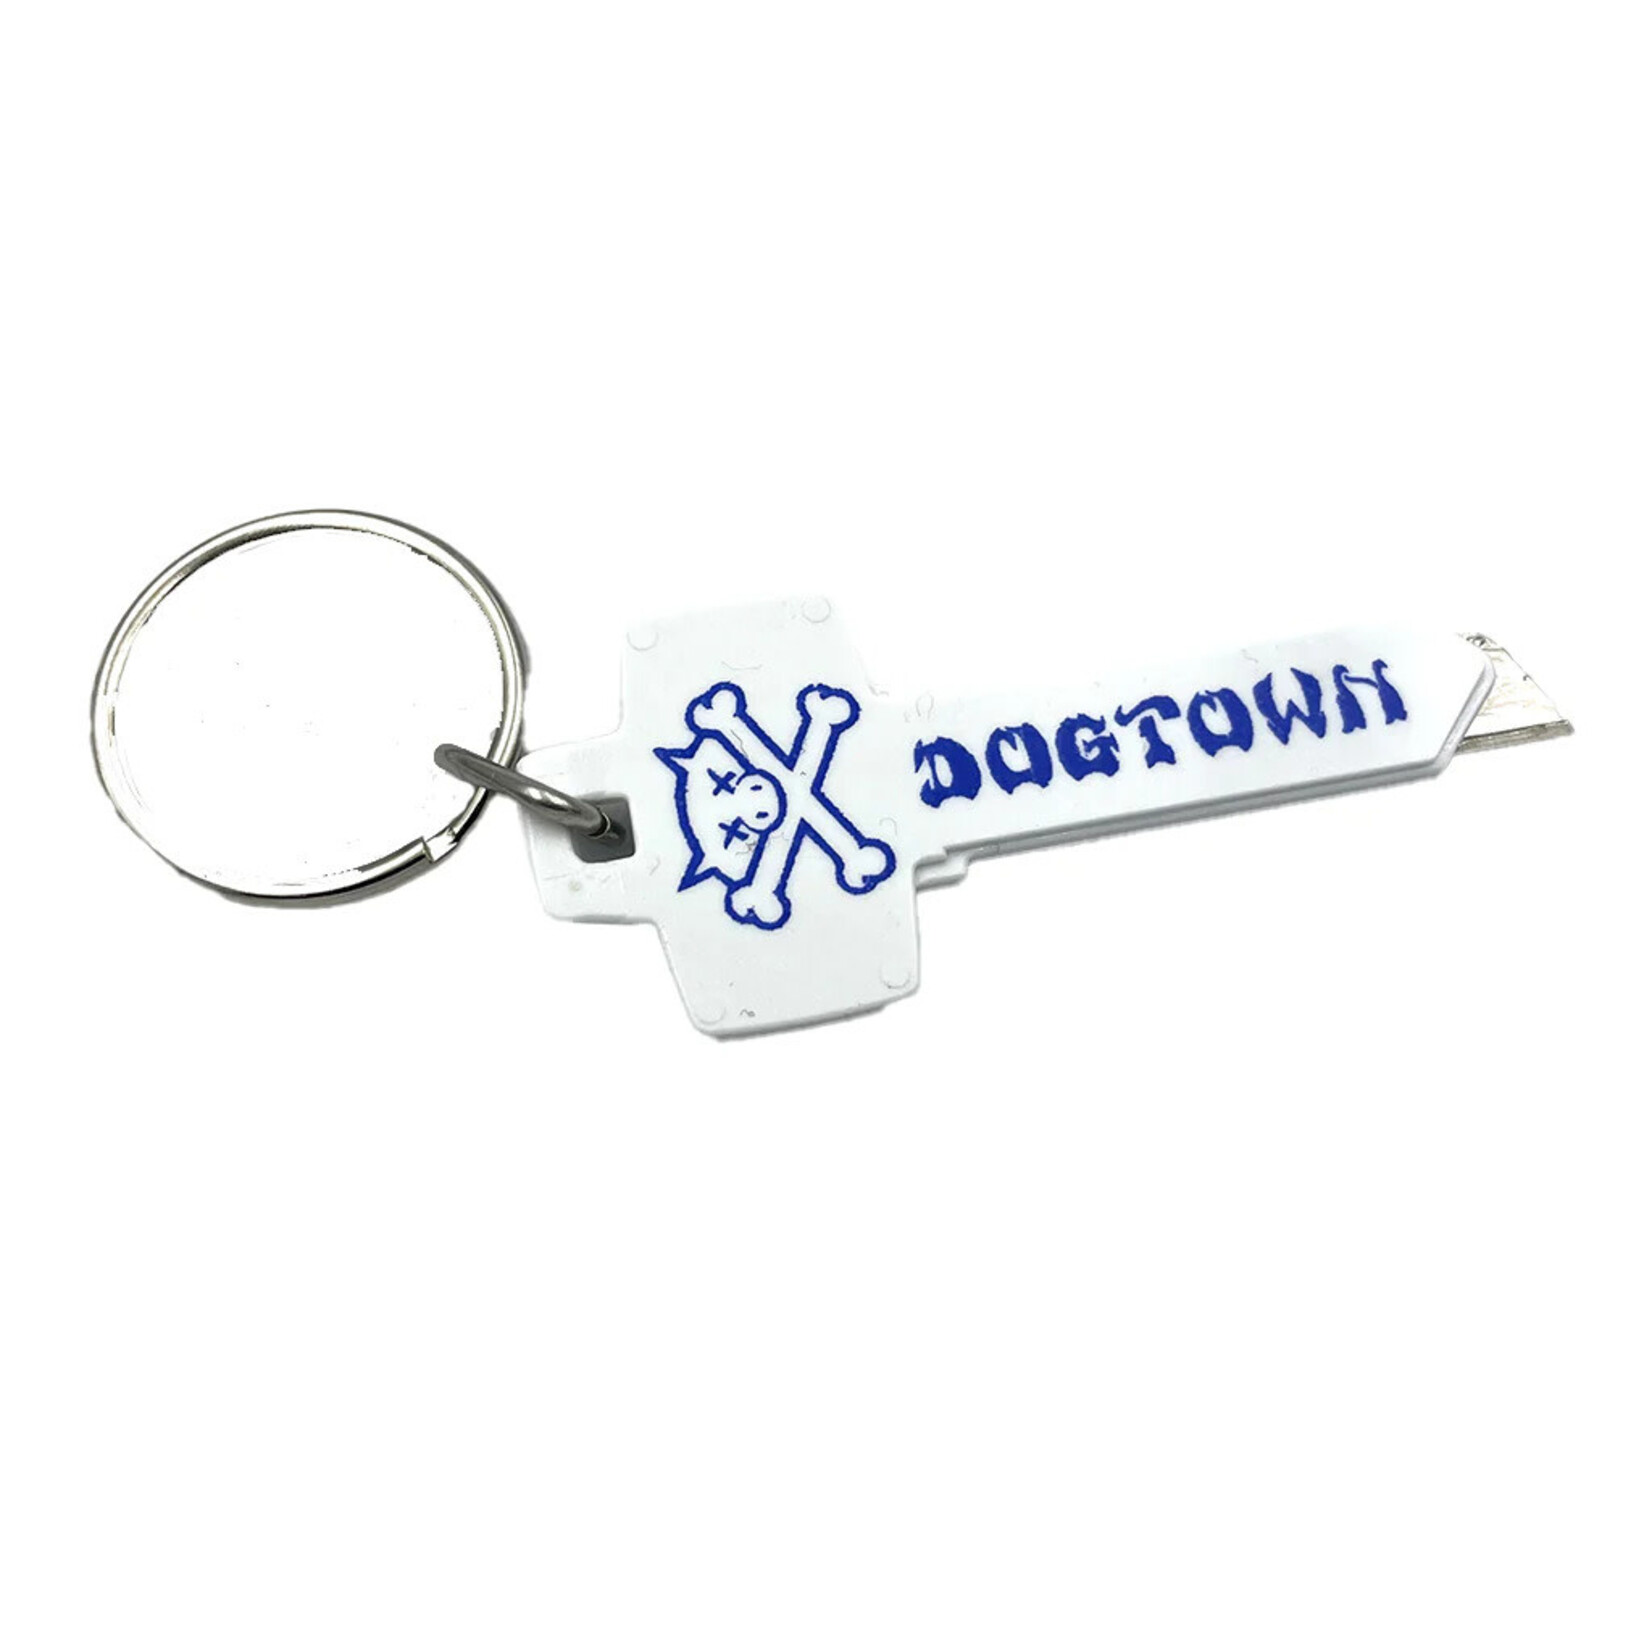 Dogtown Dogtown Keychain Utility Knife - White / Blue